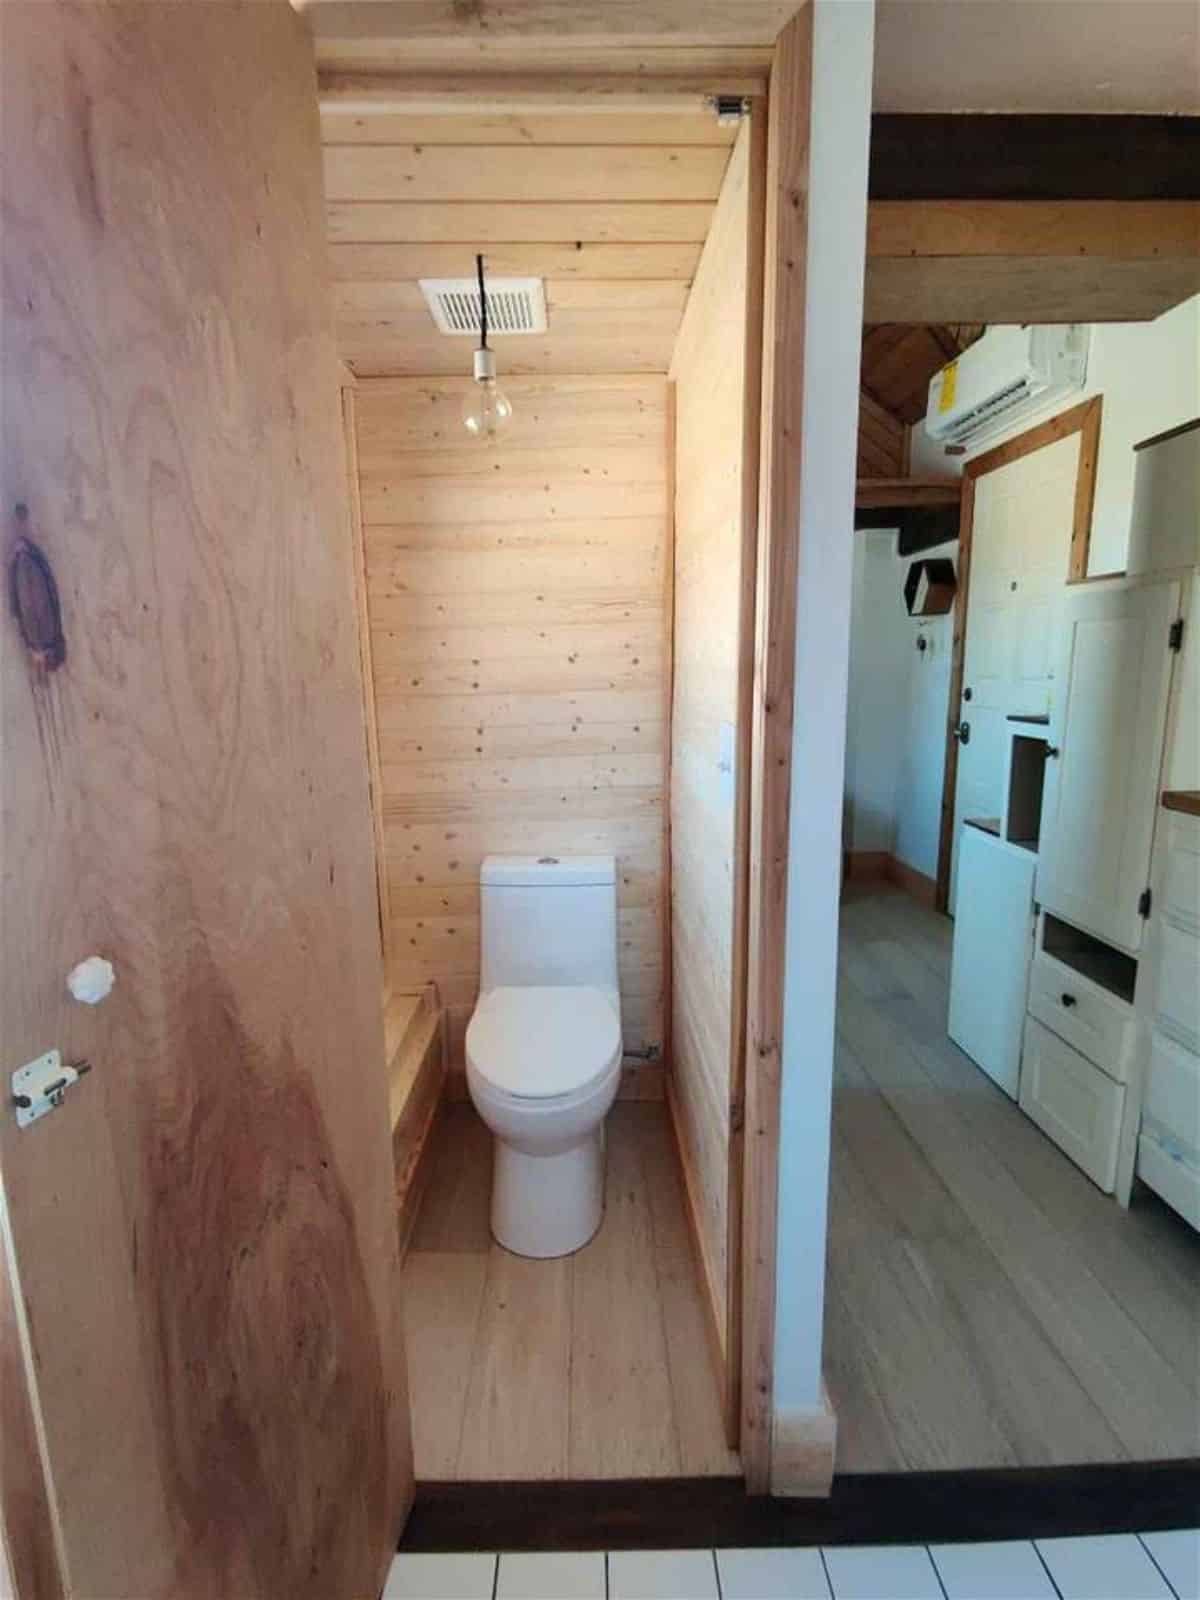 Standard toilet with standard fittings in bathroom